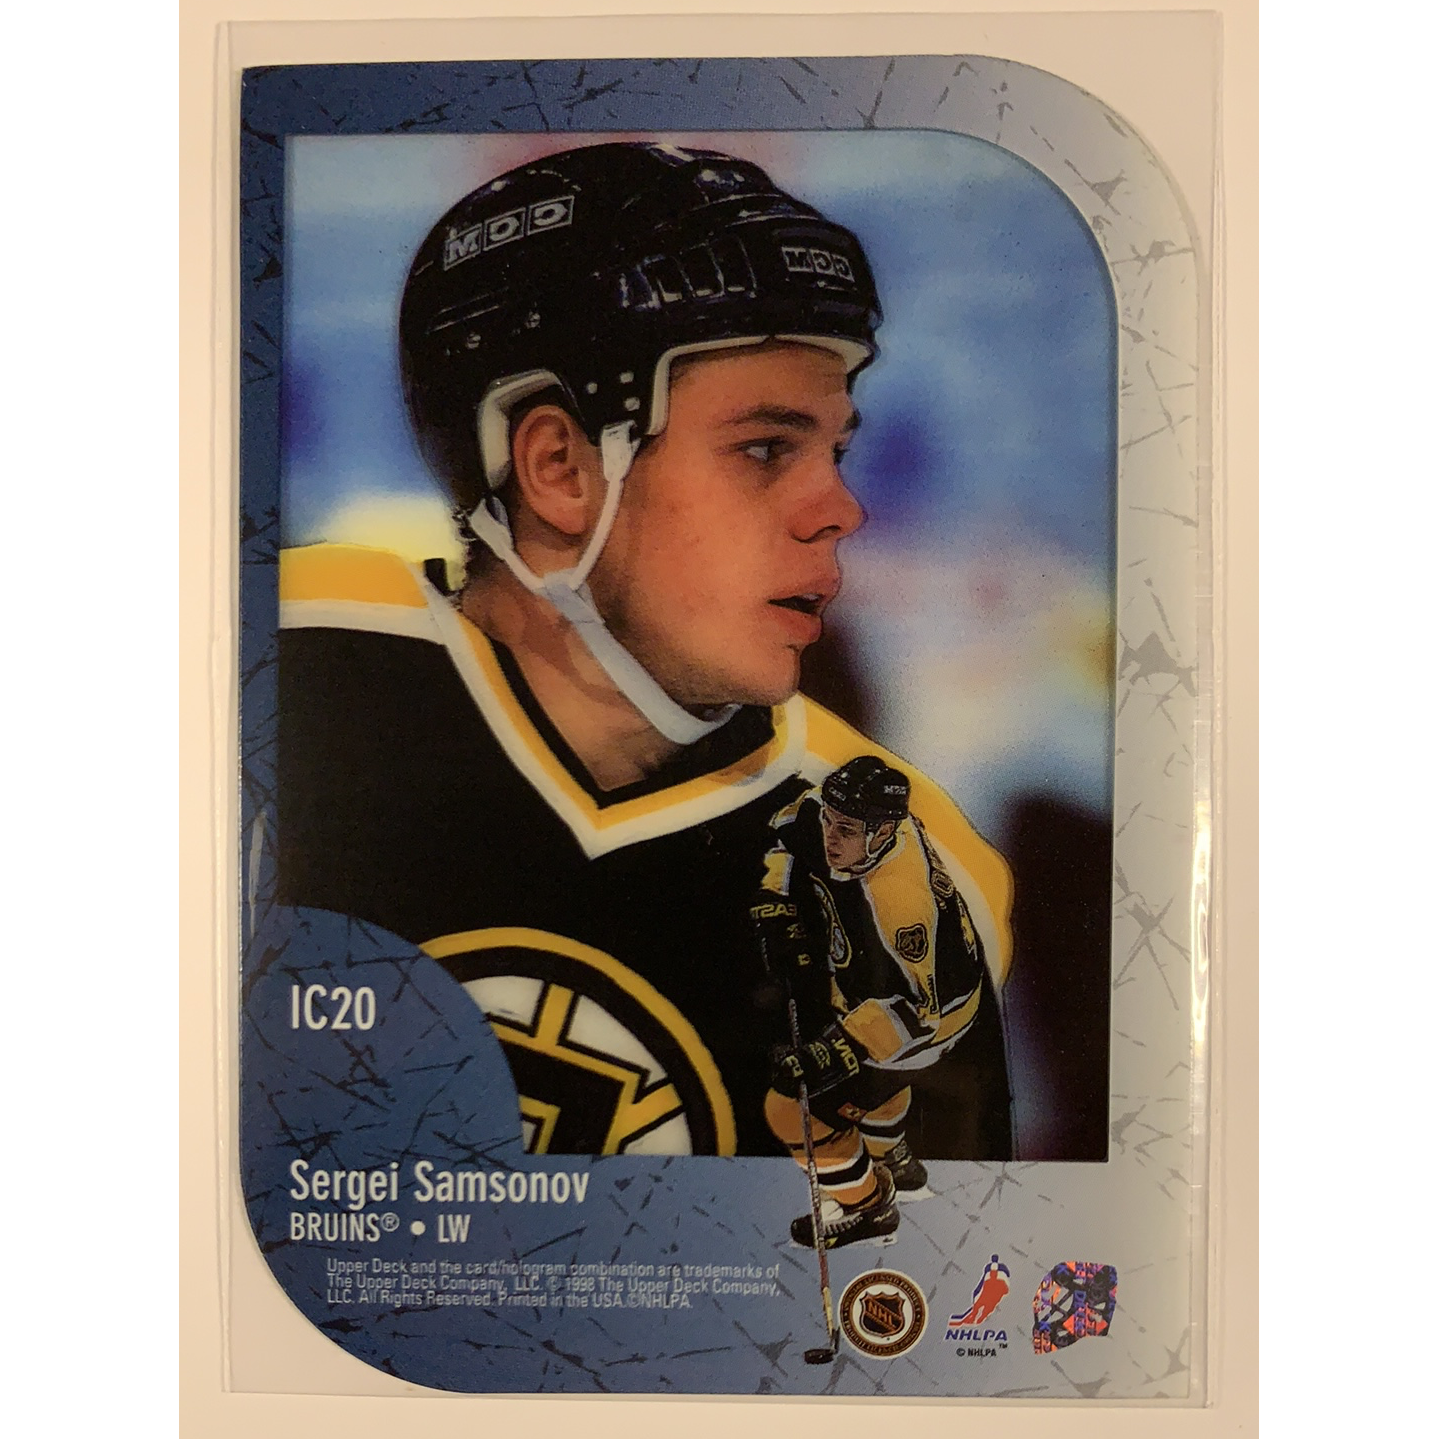  1998-99 Upper Deck Ice Sergei Samsonov Champions  Local Legends Cards & Collectibles